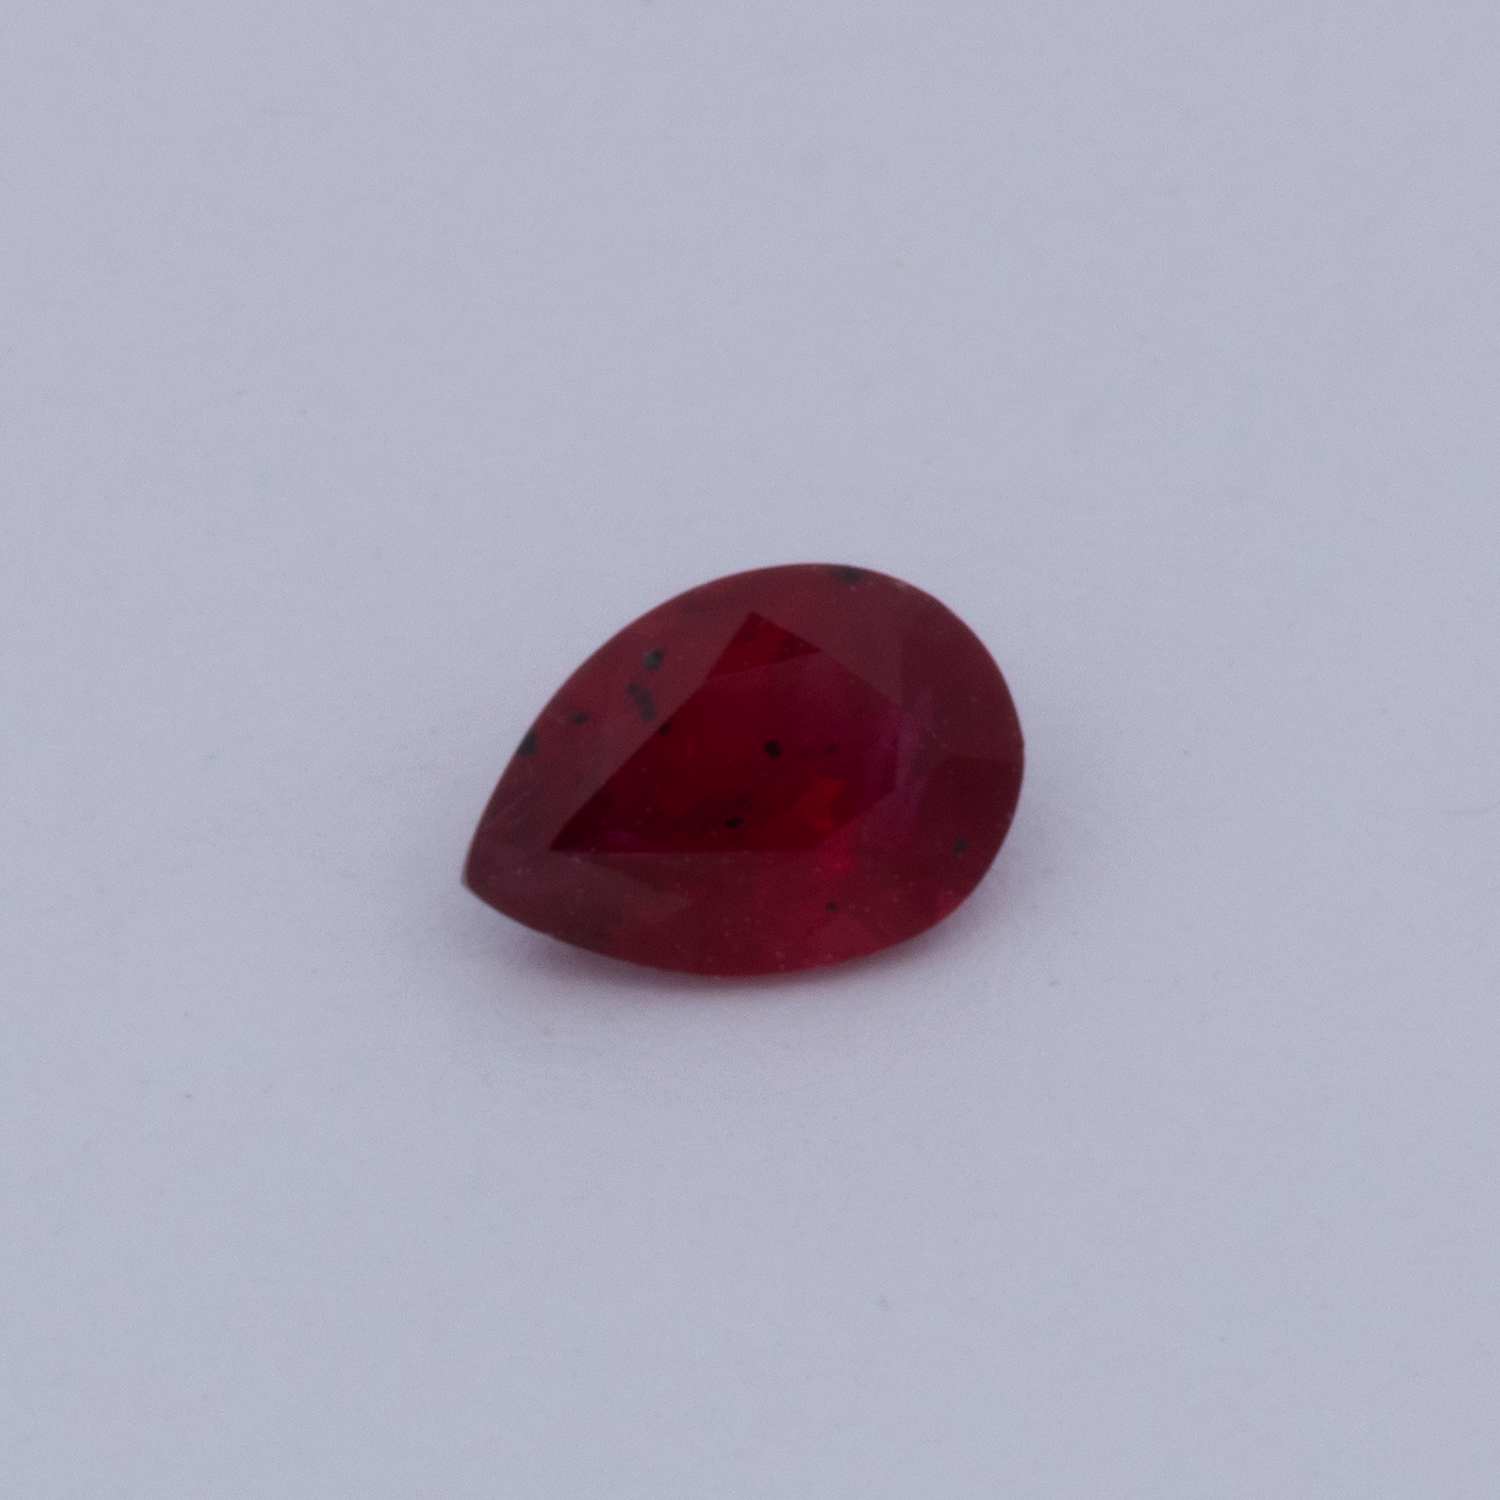 Rubin - rot, birnform, 5x3.5 mm, 0.27 cts, Nr. RY10016